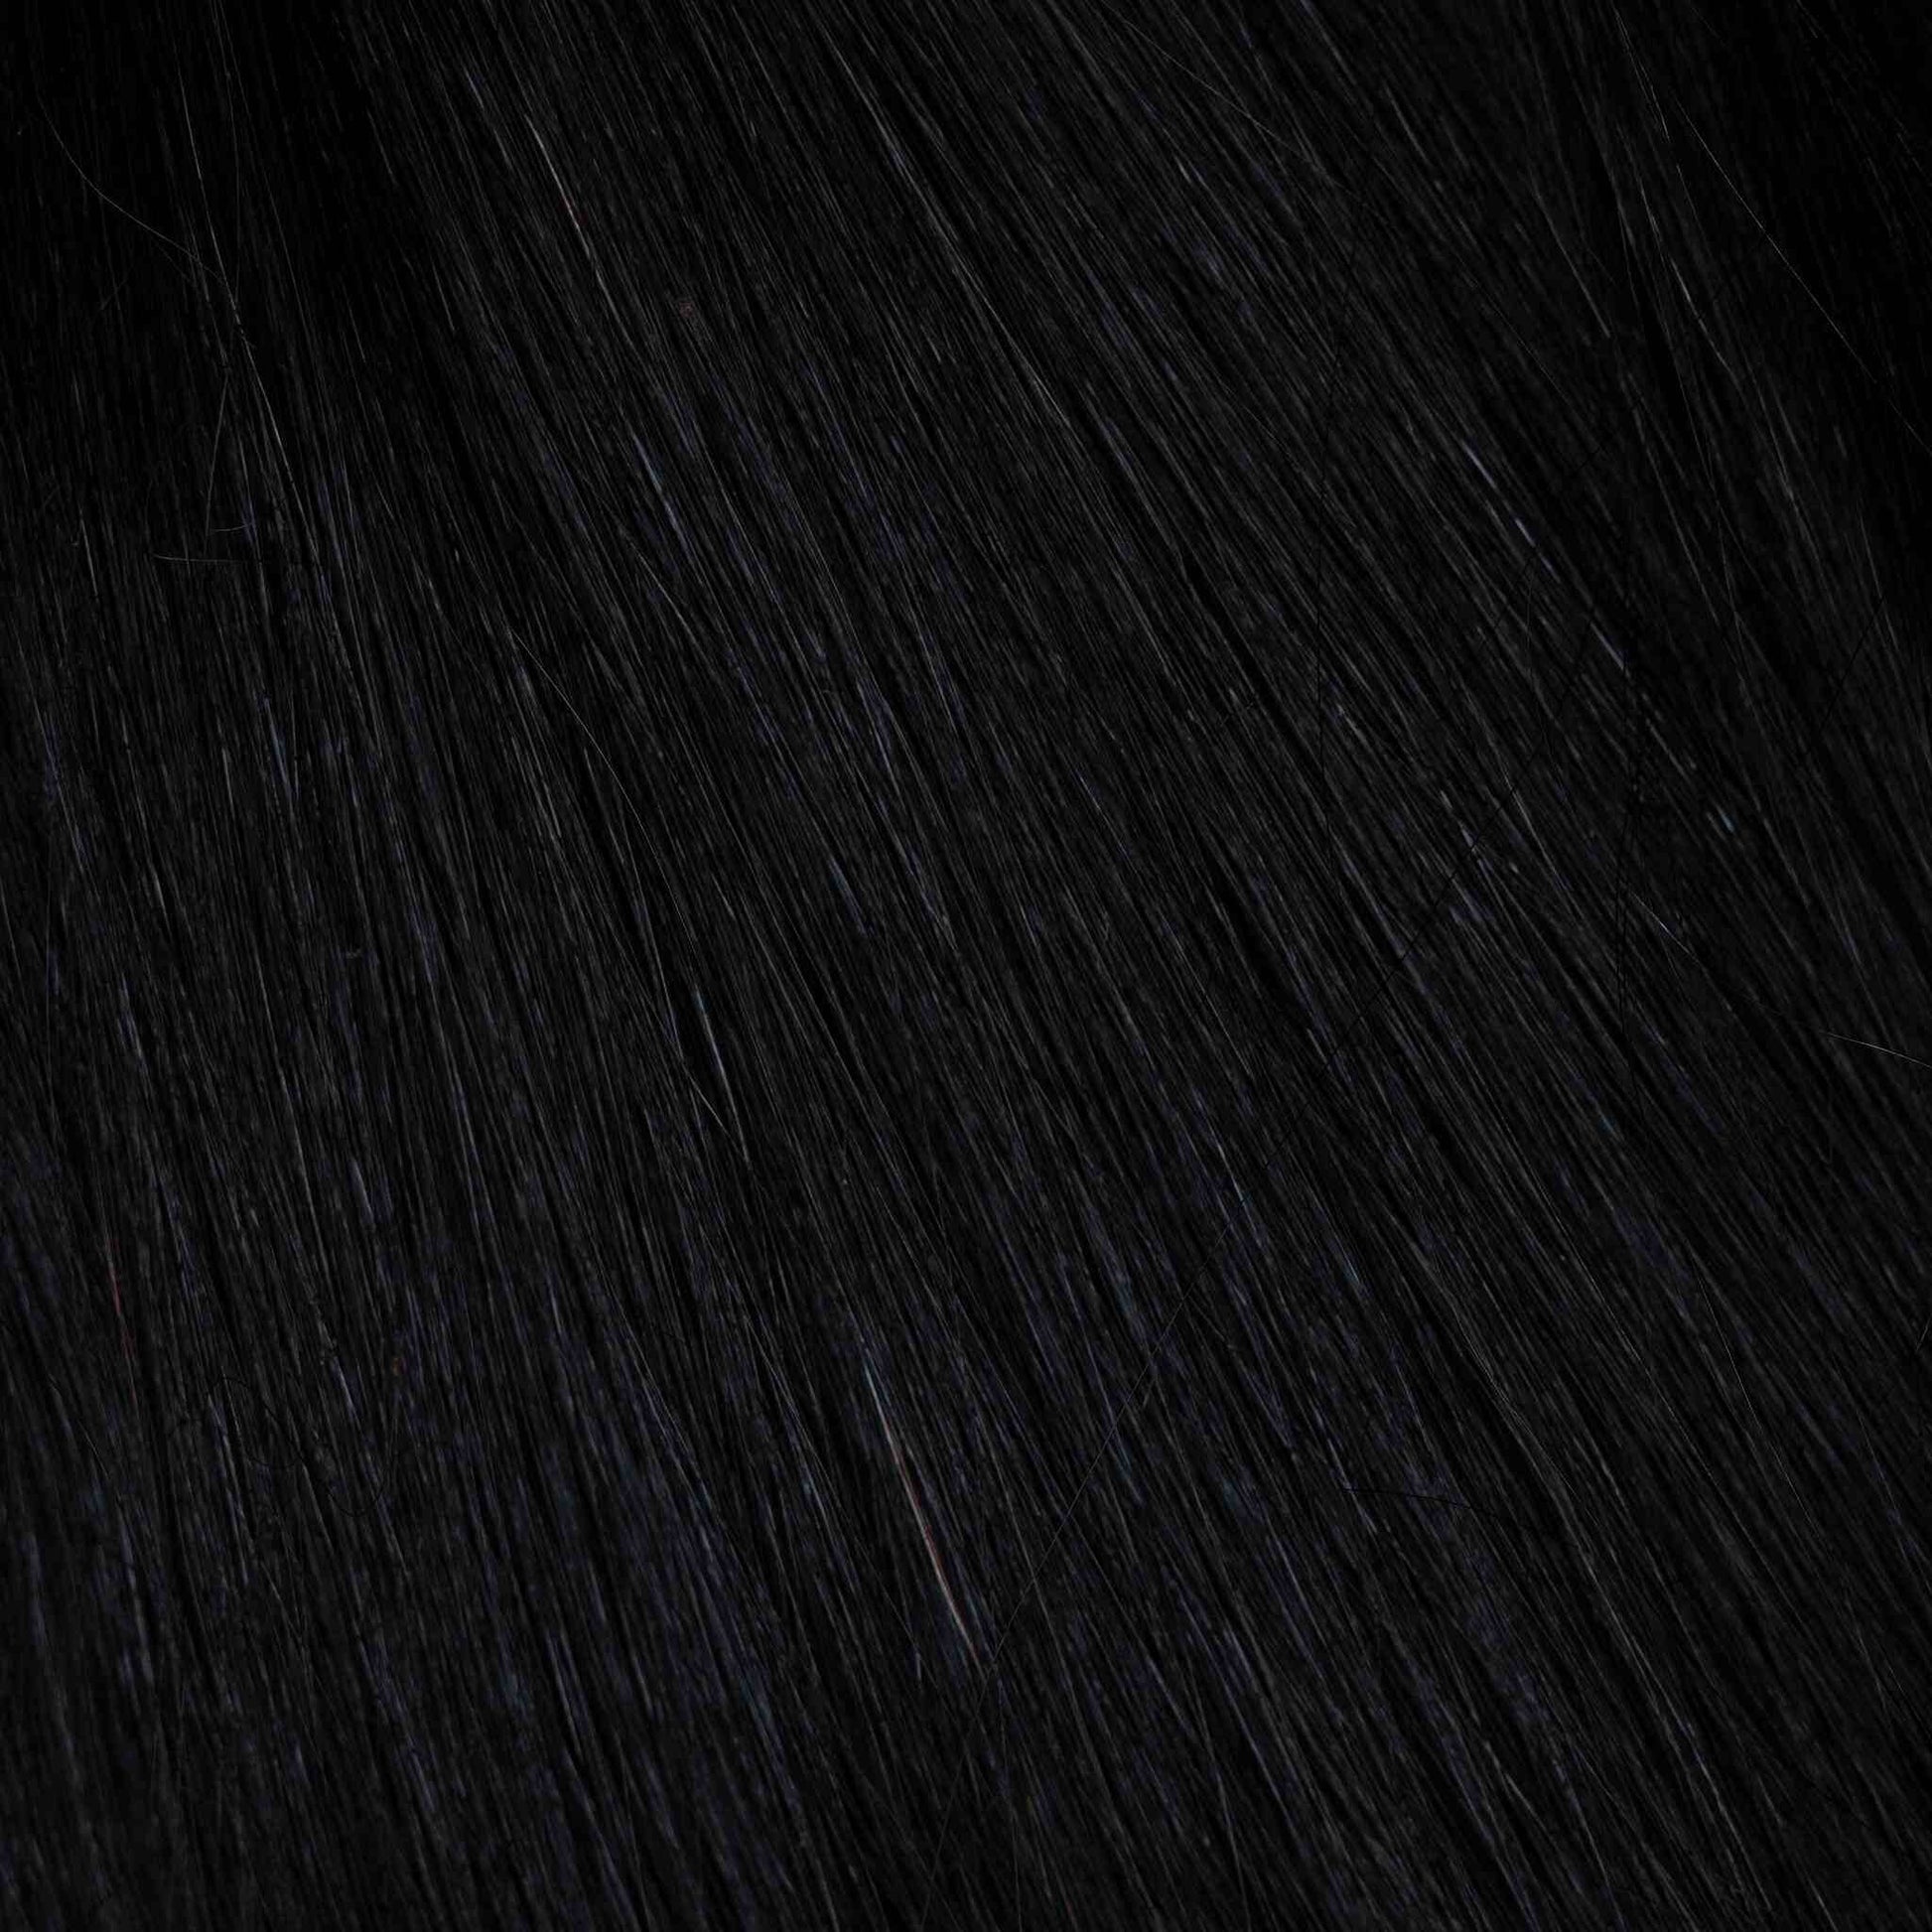 I-Tip 16" 25g Professional Hair Extensions - Jet Black #1